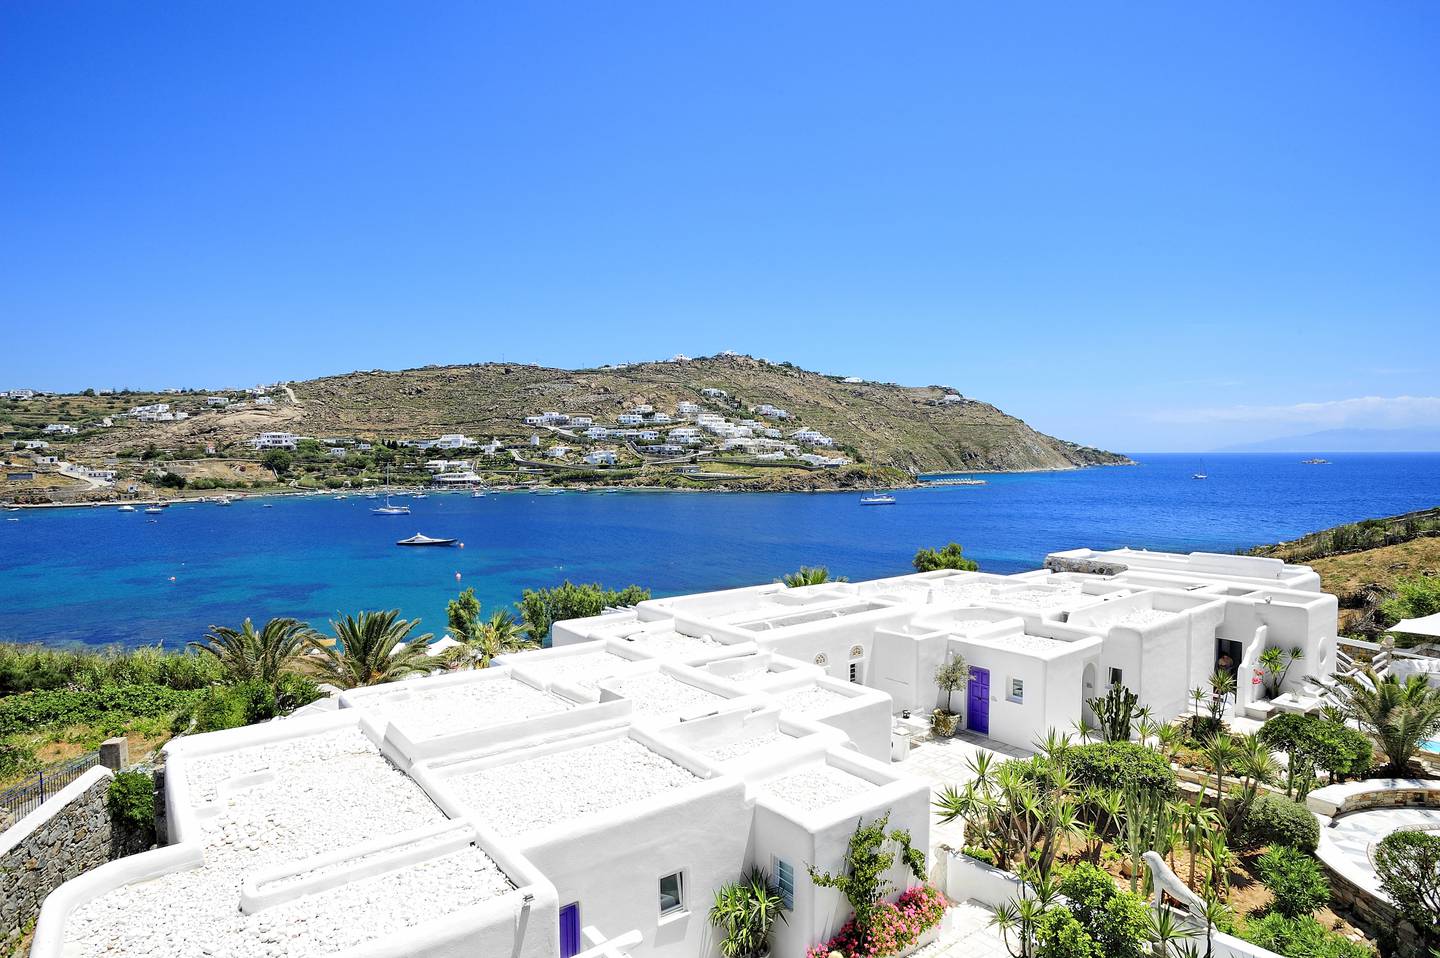 The hotel looks out over Ornos Bay. Photo: Kivotos Mykonos